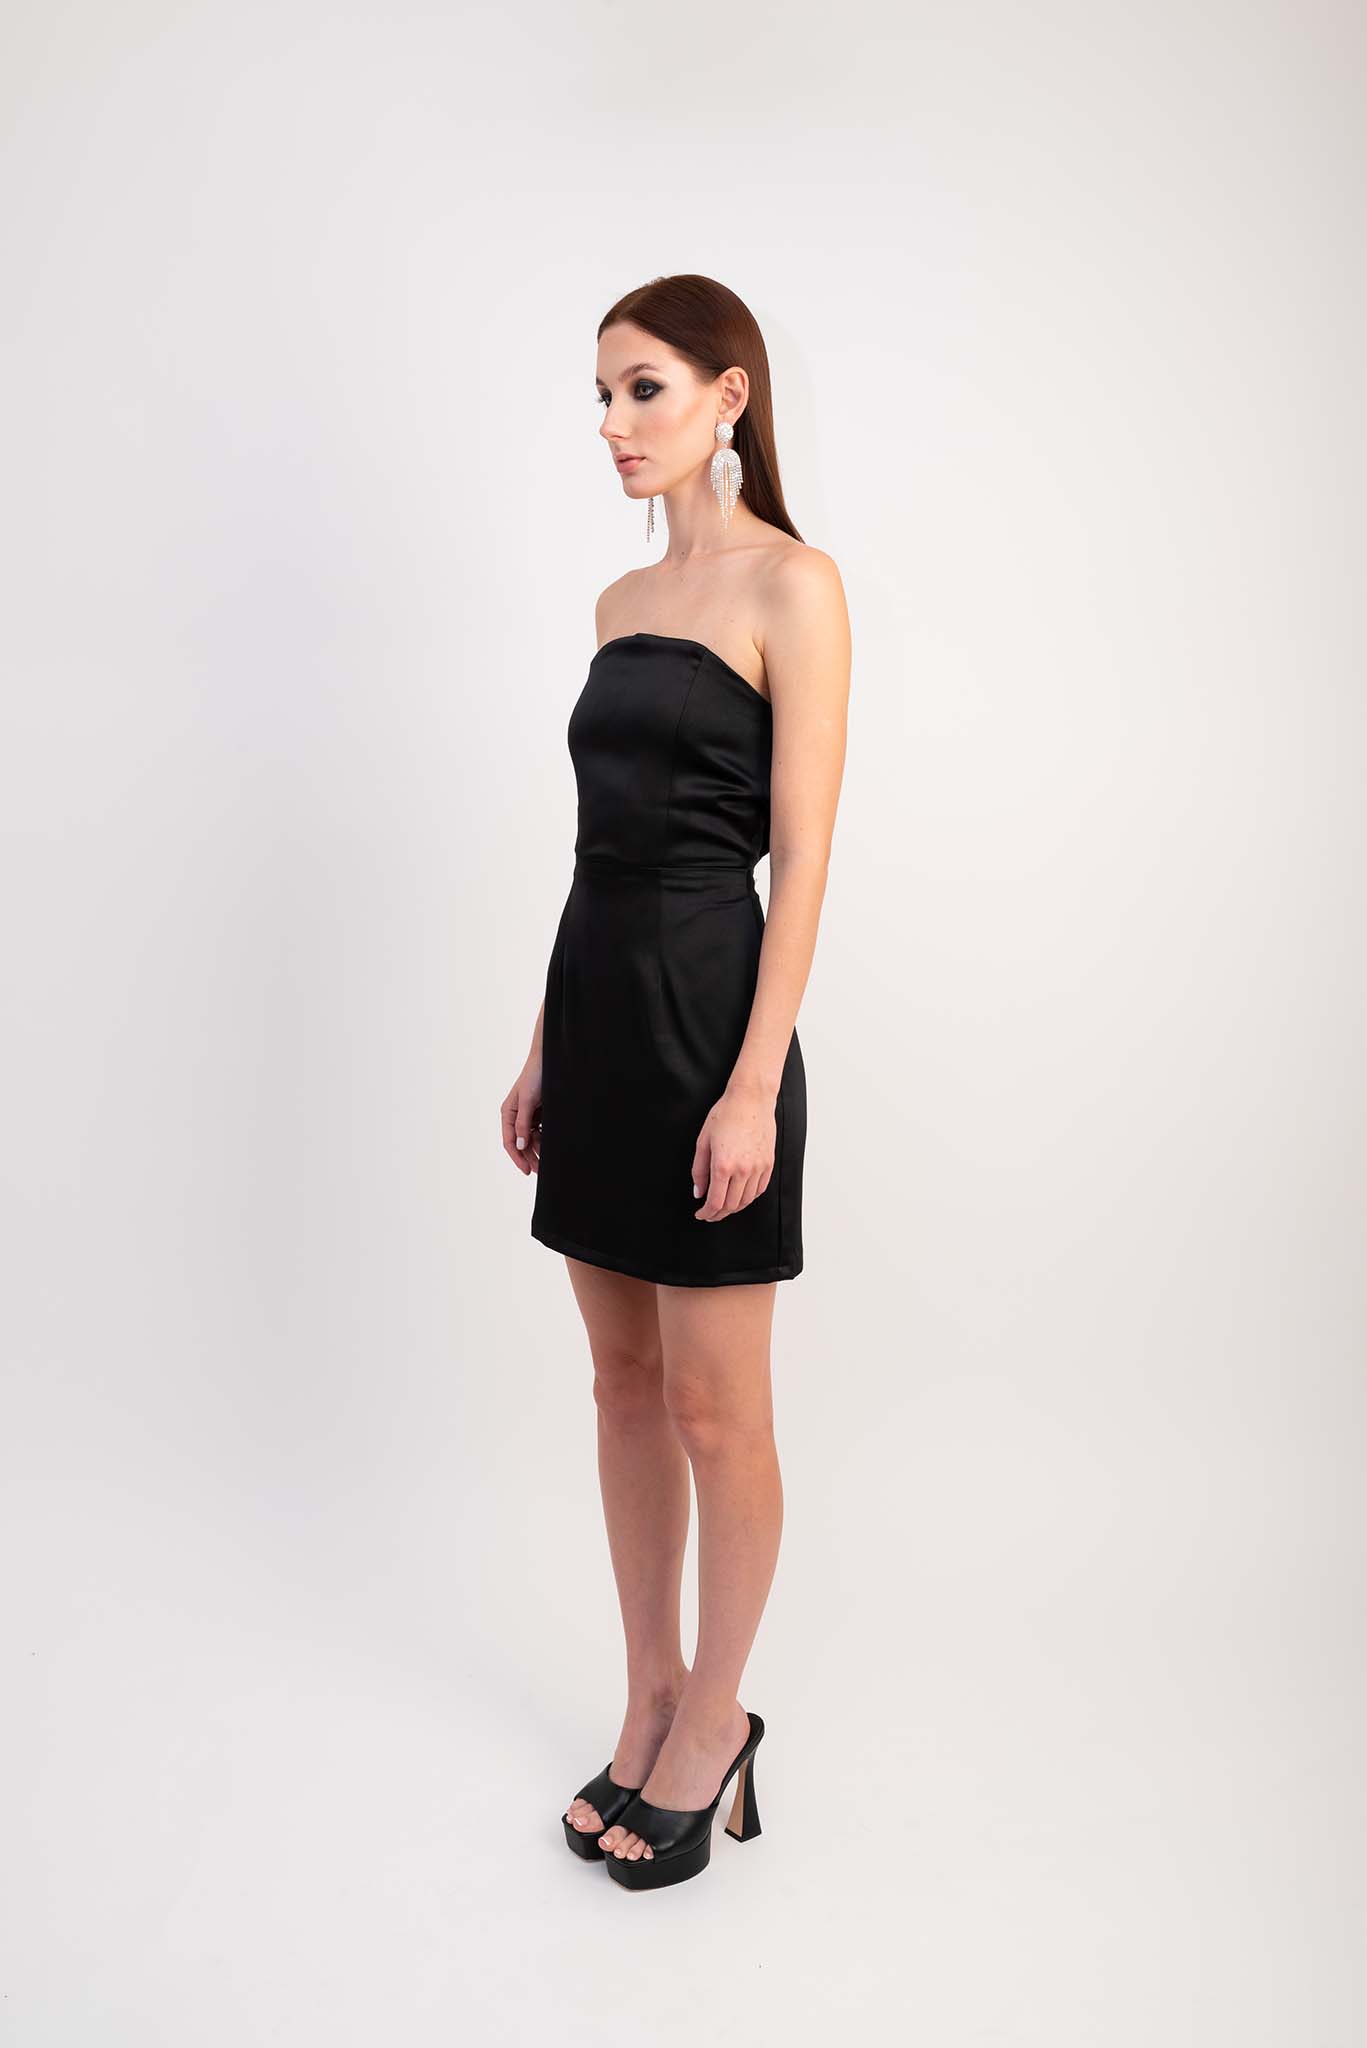 IRA by Irini Charalampous, @irathebrand online shop fashionable ready-to-wear womenswear brand satin dress ANNA color black high heels Cyprus Greece